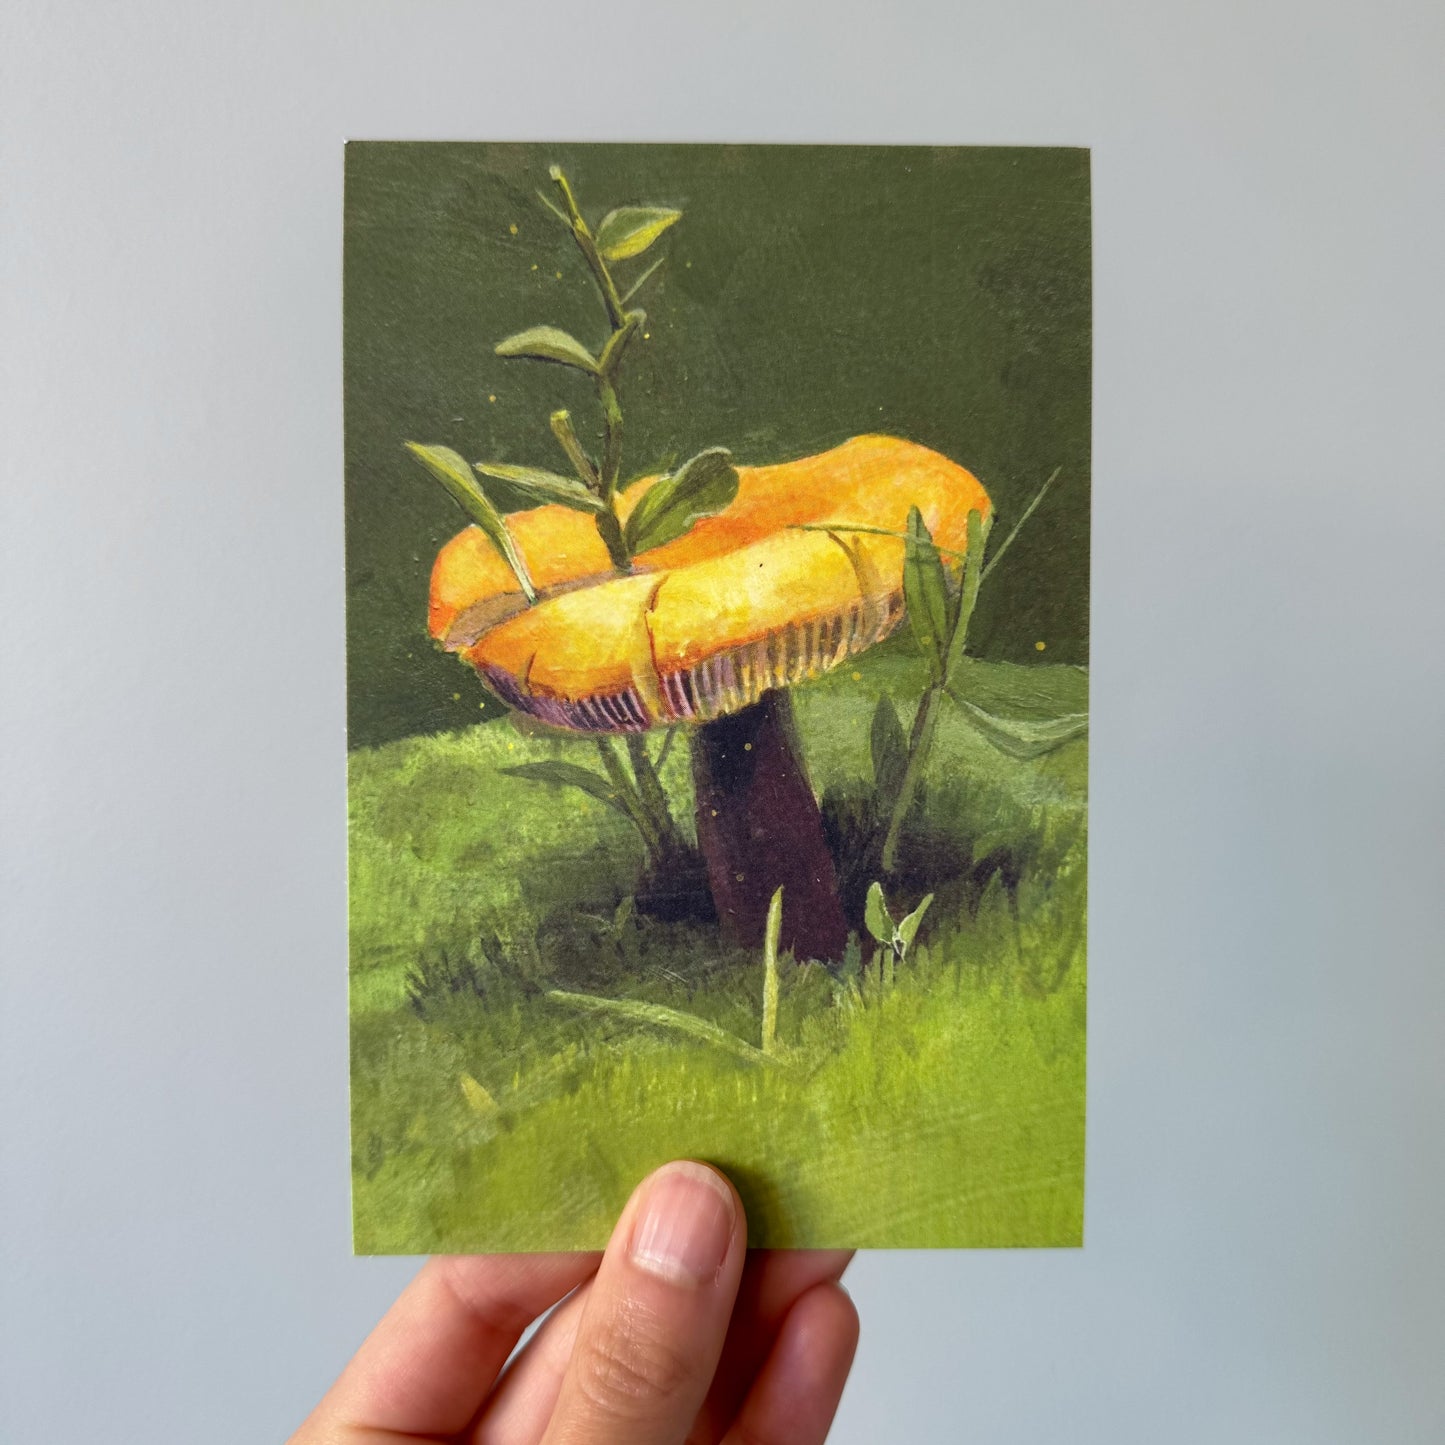 Golden Wax Cap Mushroom 5 recycled art postcards set